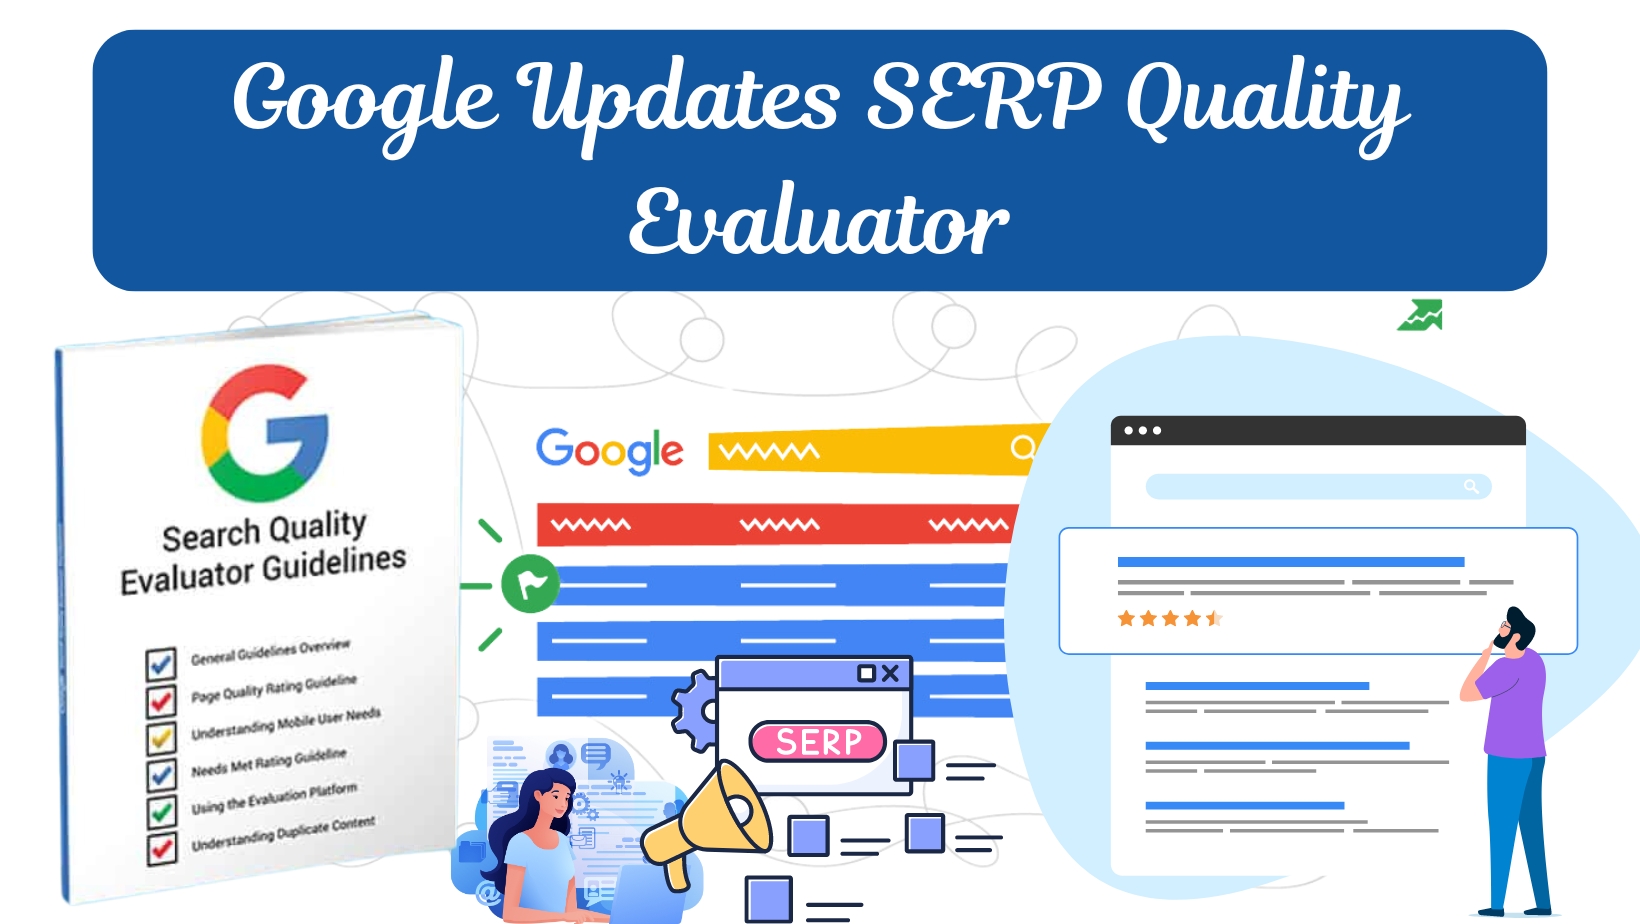 Google Updates SERP Quality Evaluator